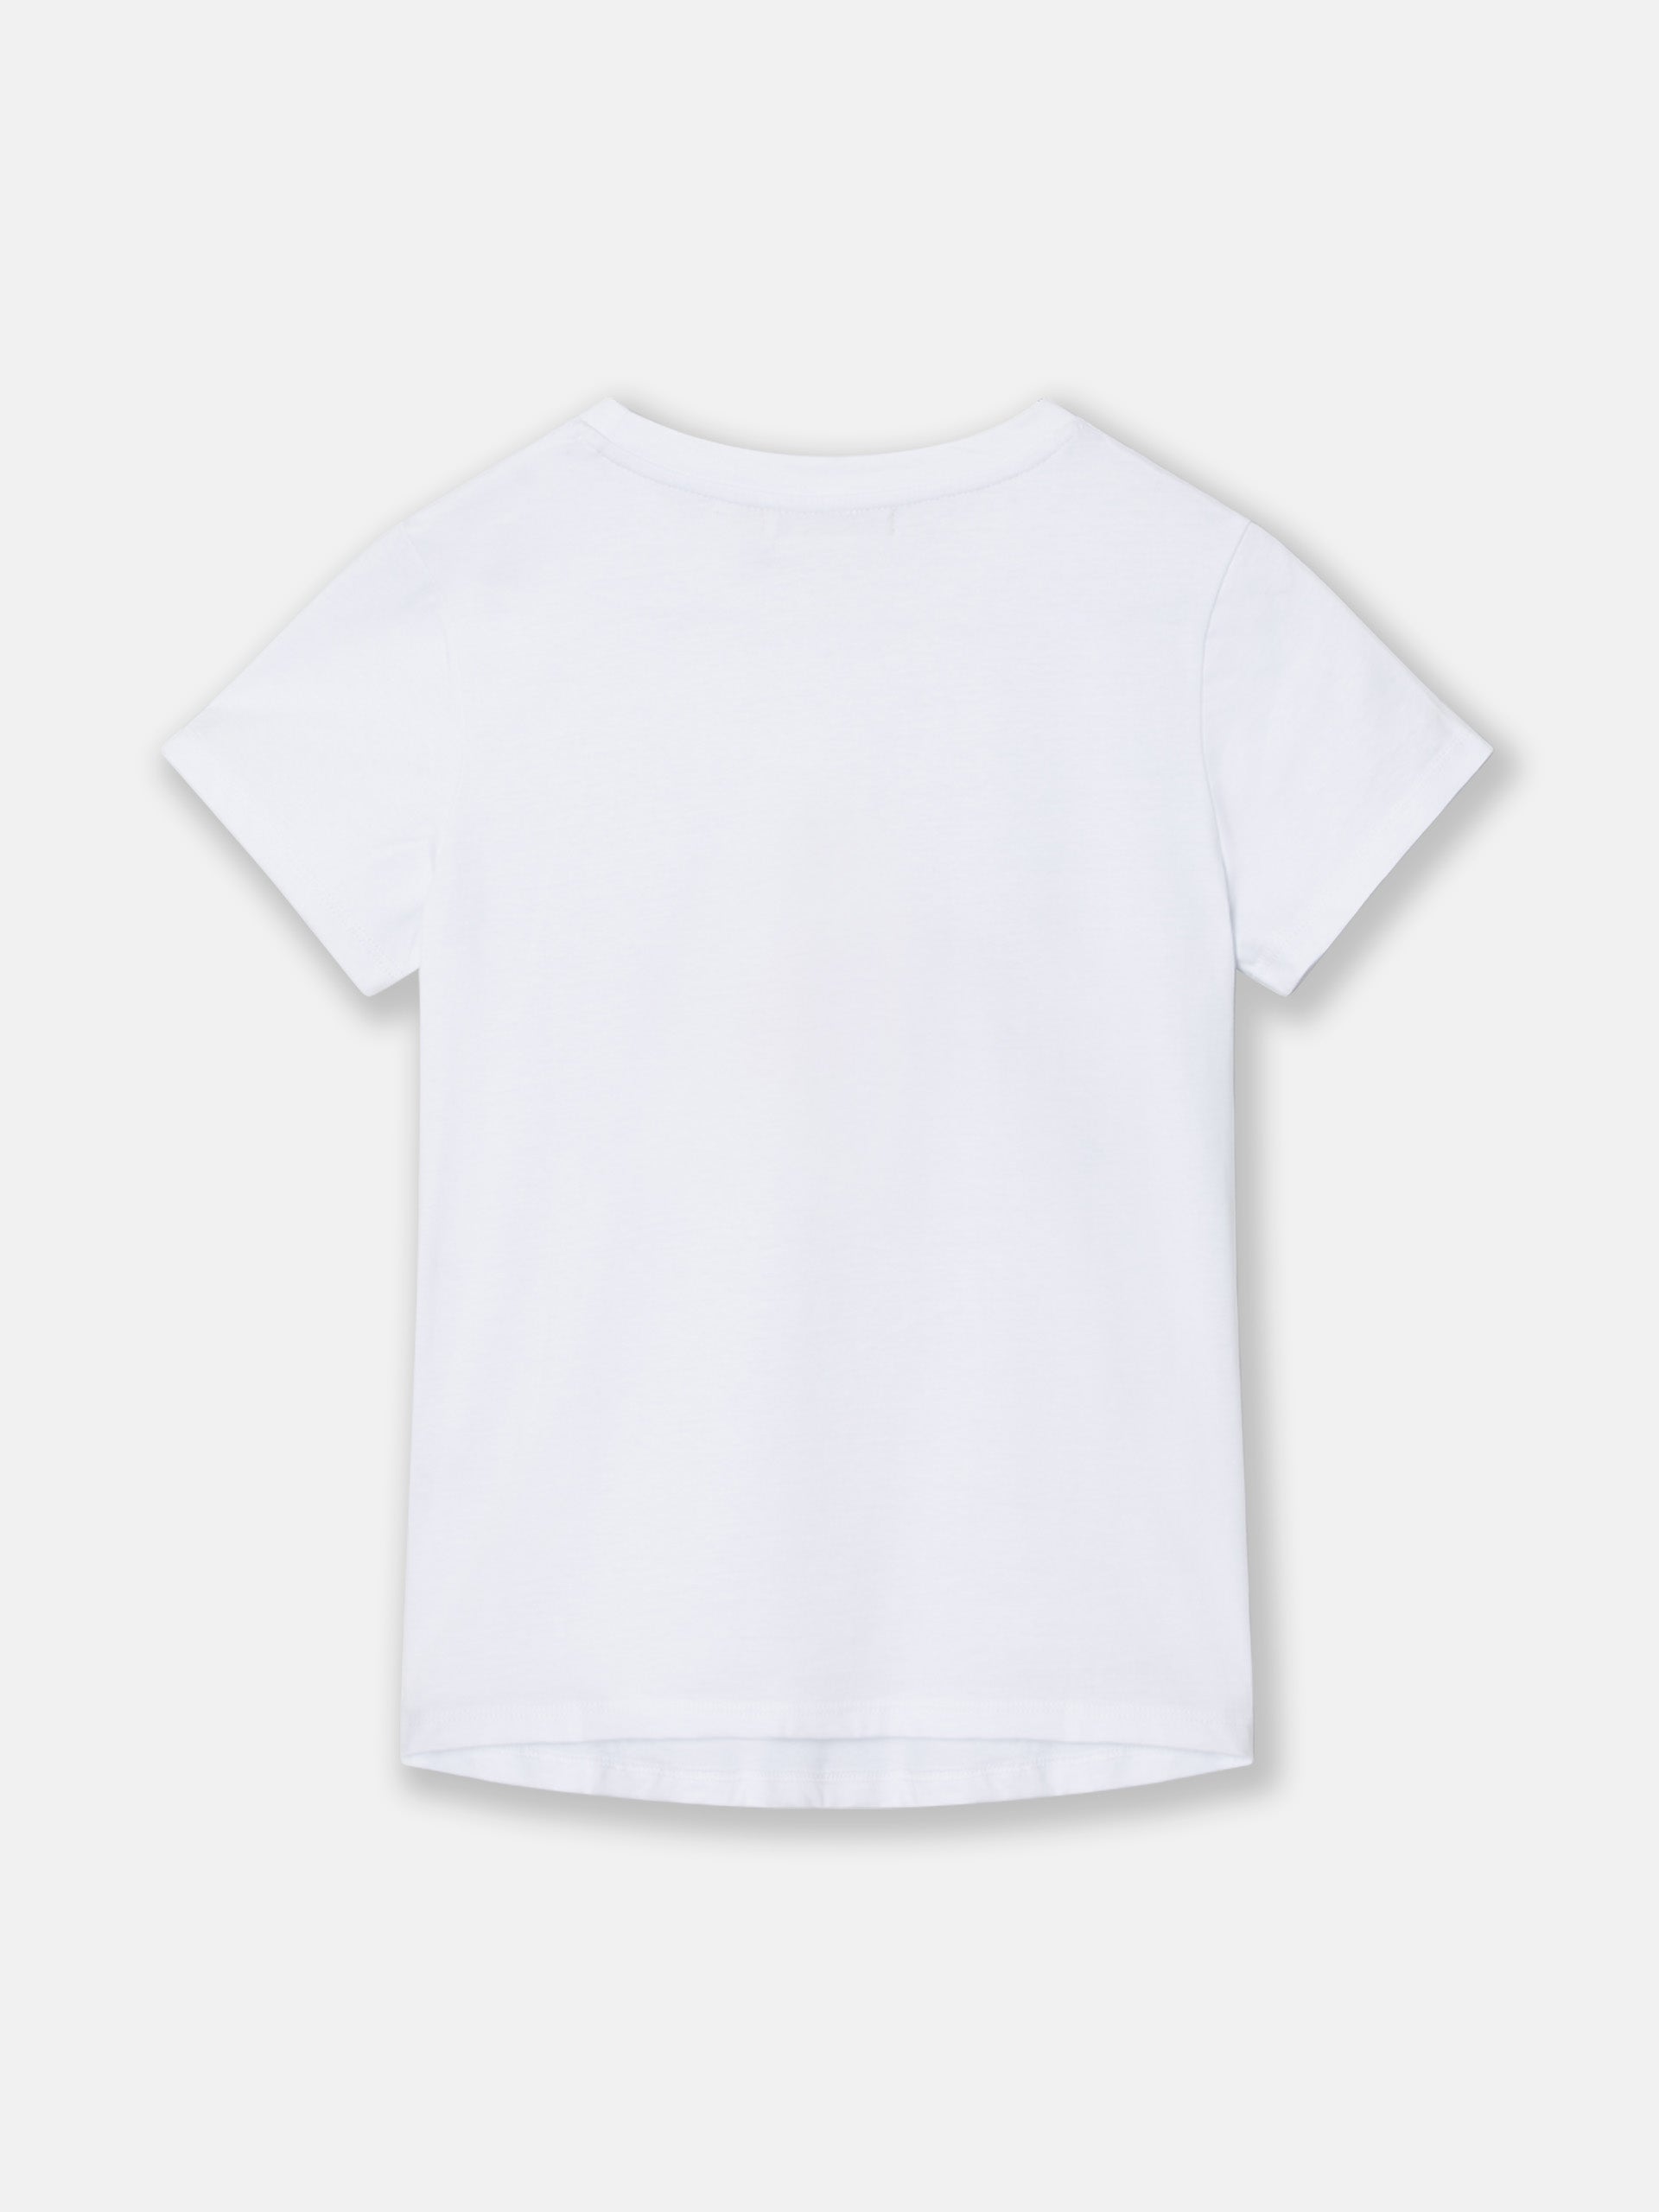 Camiseta woman dibujo ikat blanca